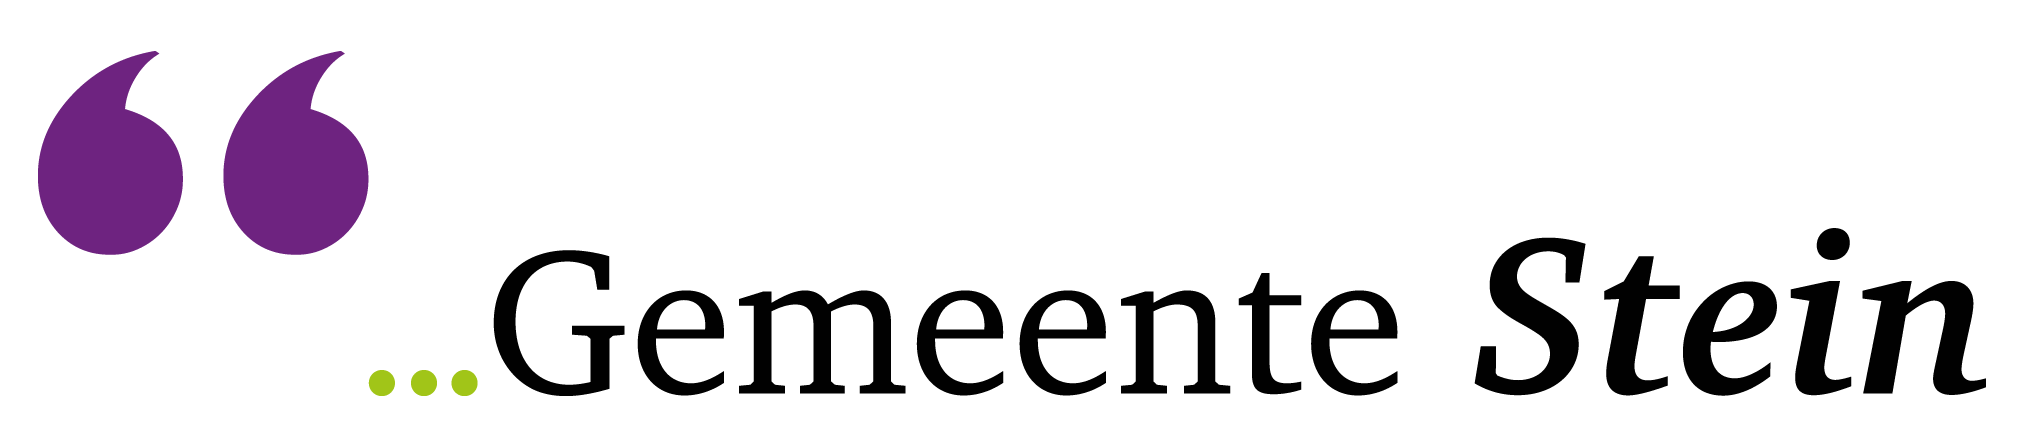 Logo gemeente Stein paars